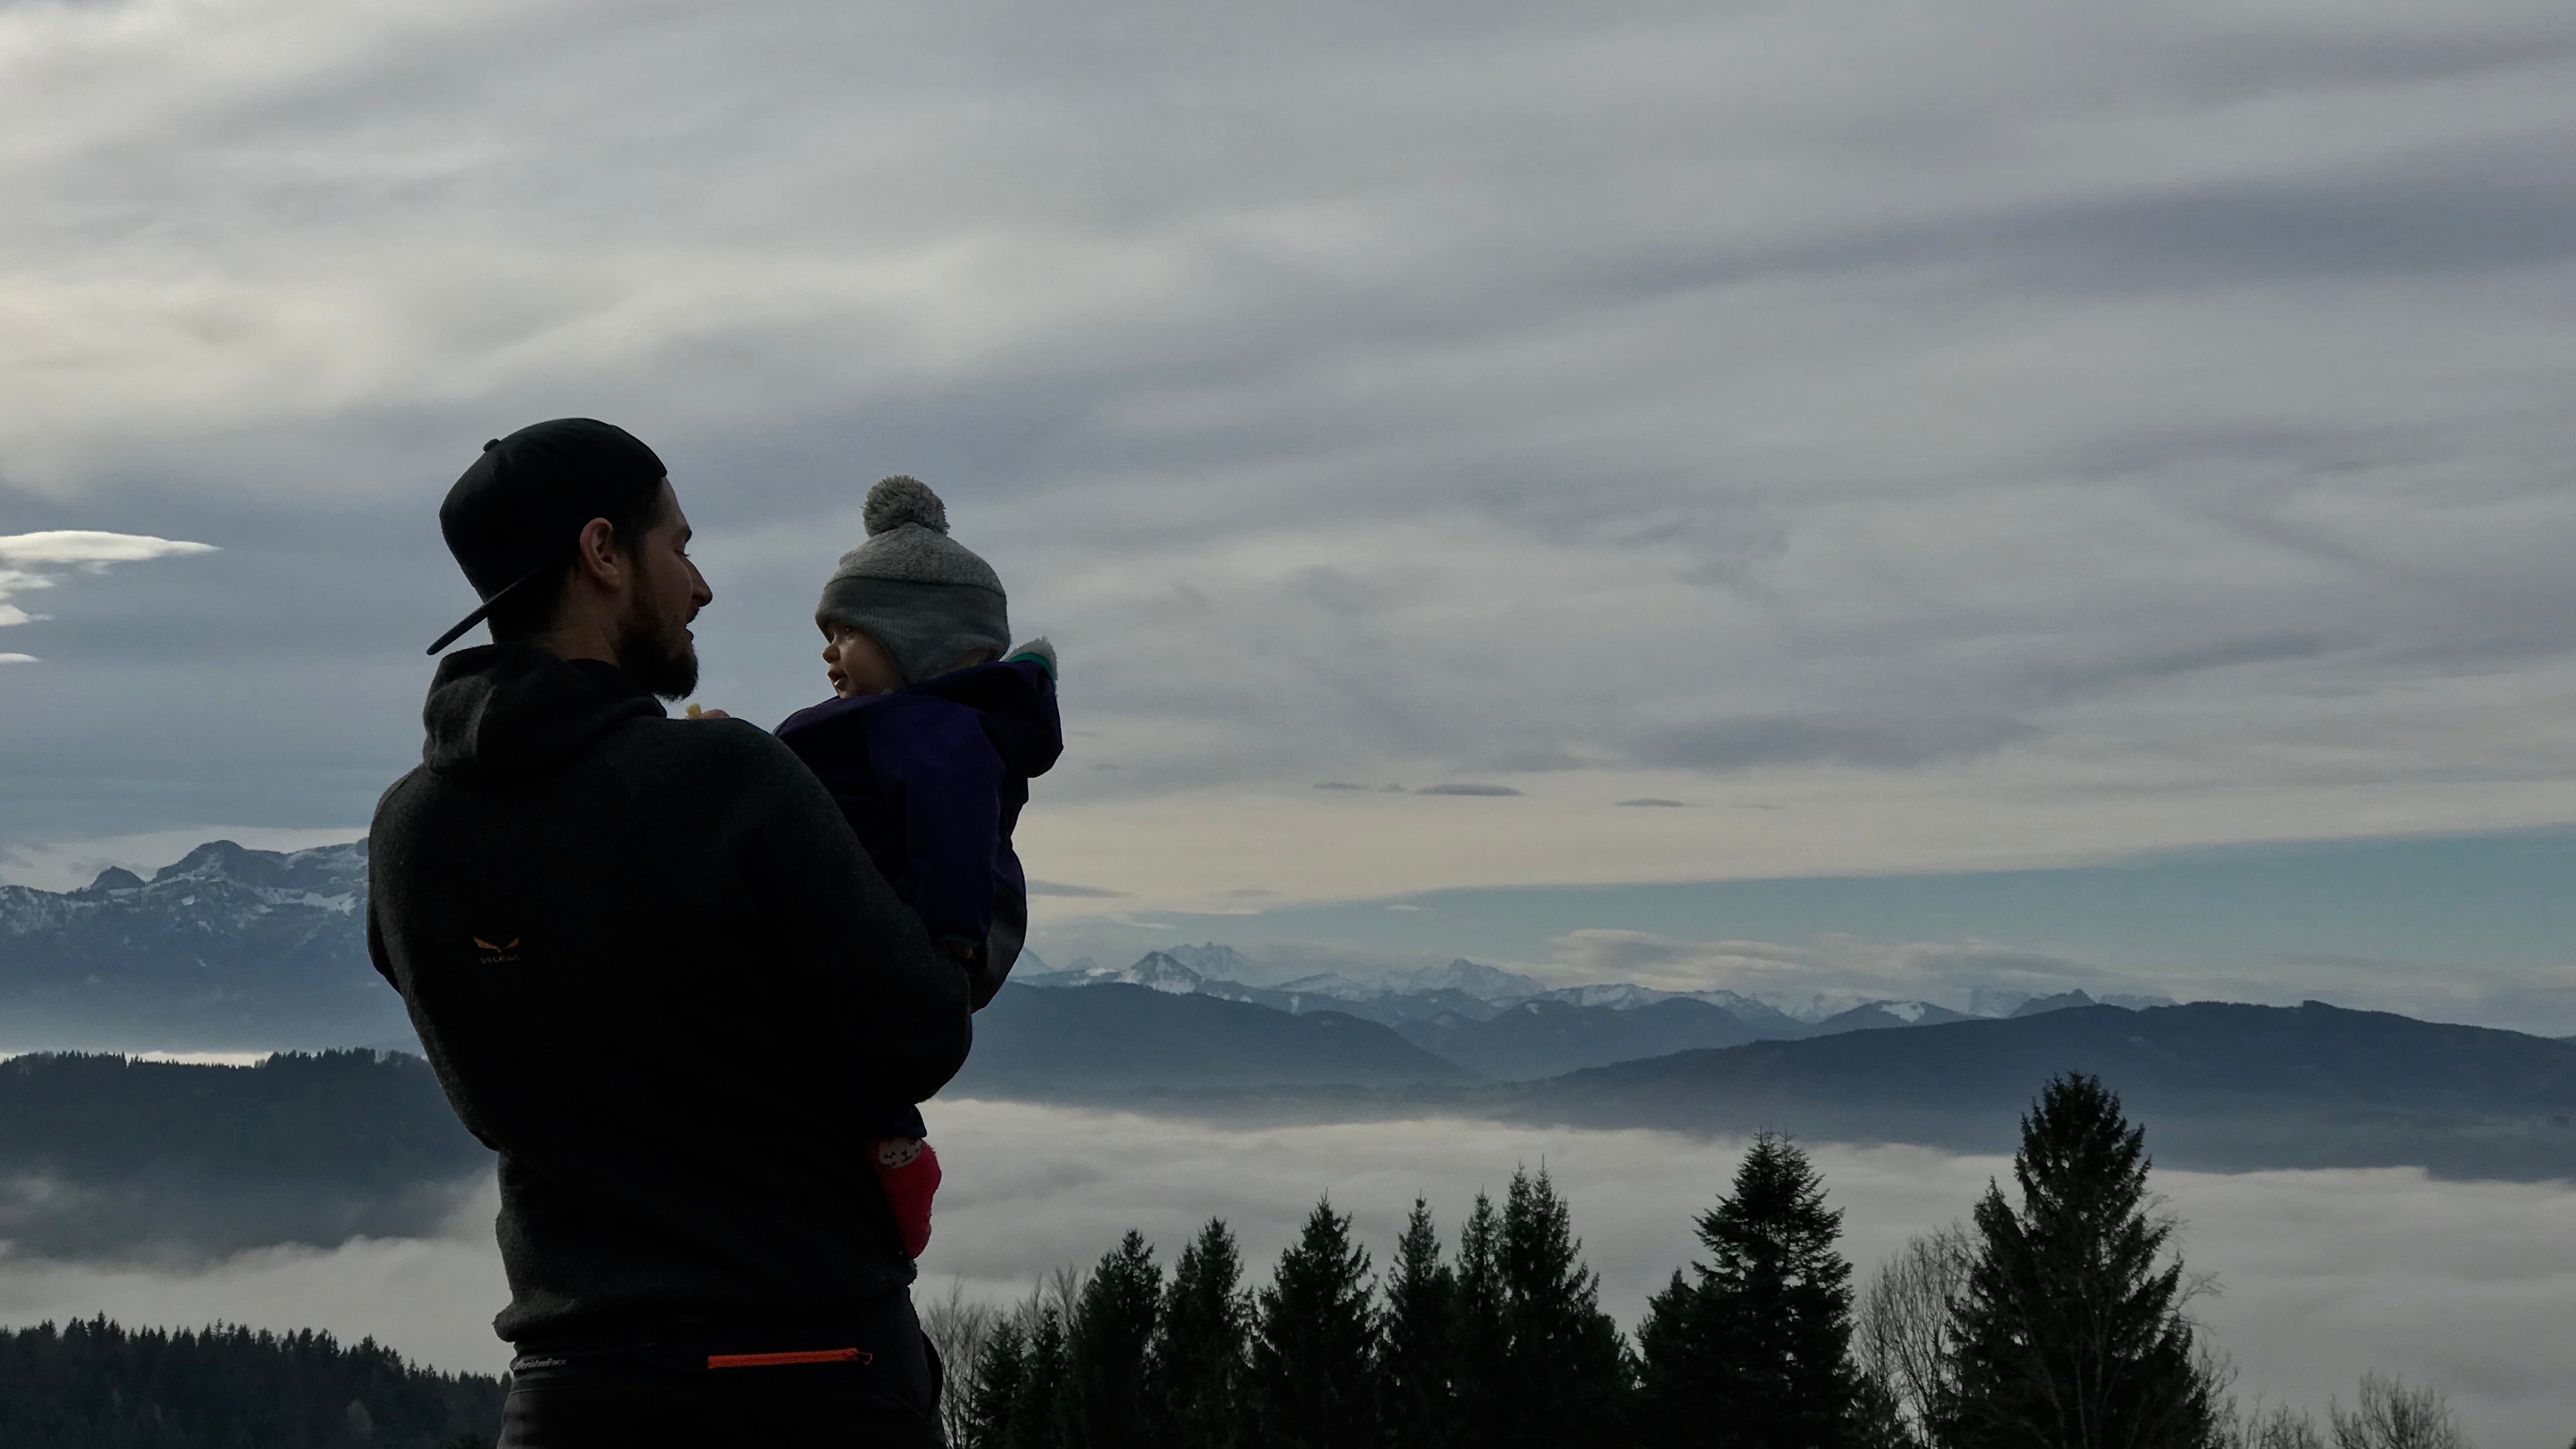 Man Holding a Baby Photo, Baby, Mountain range, Trees, Snow, HQ Photo